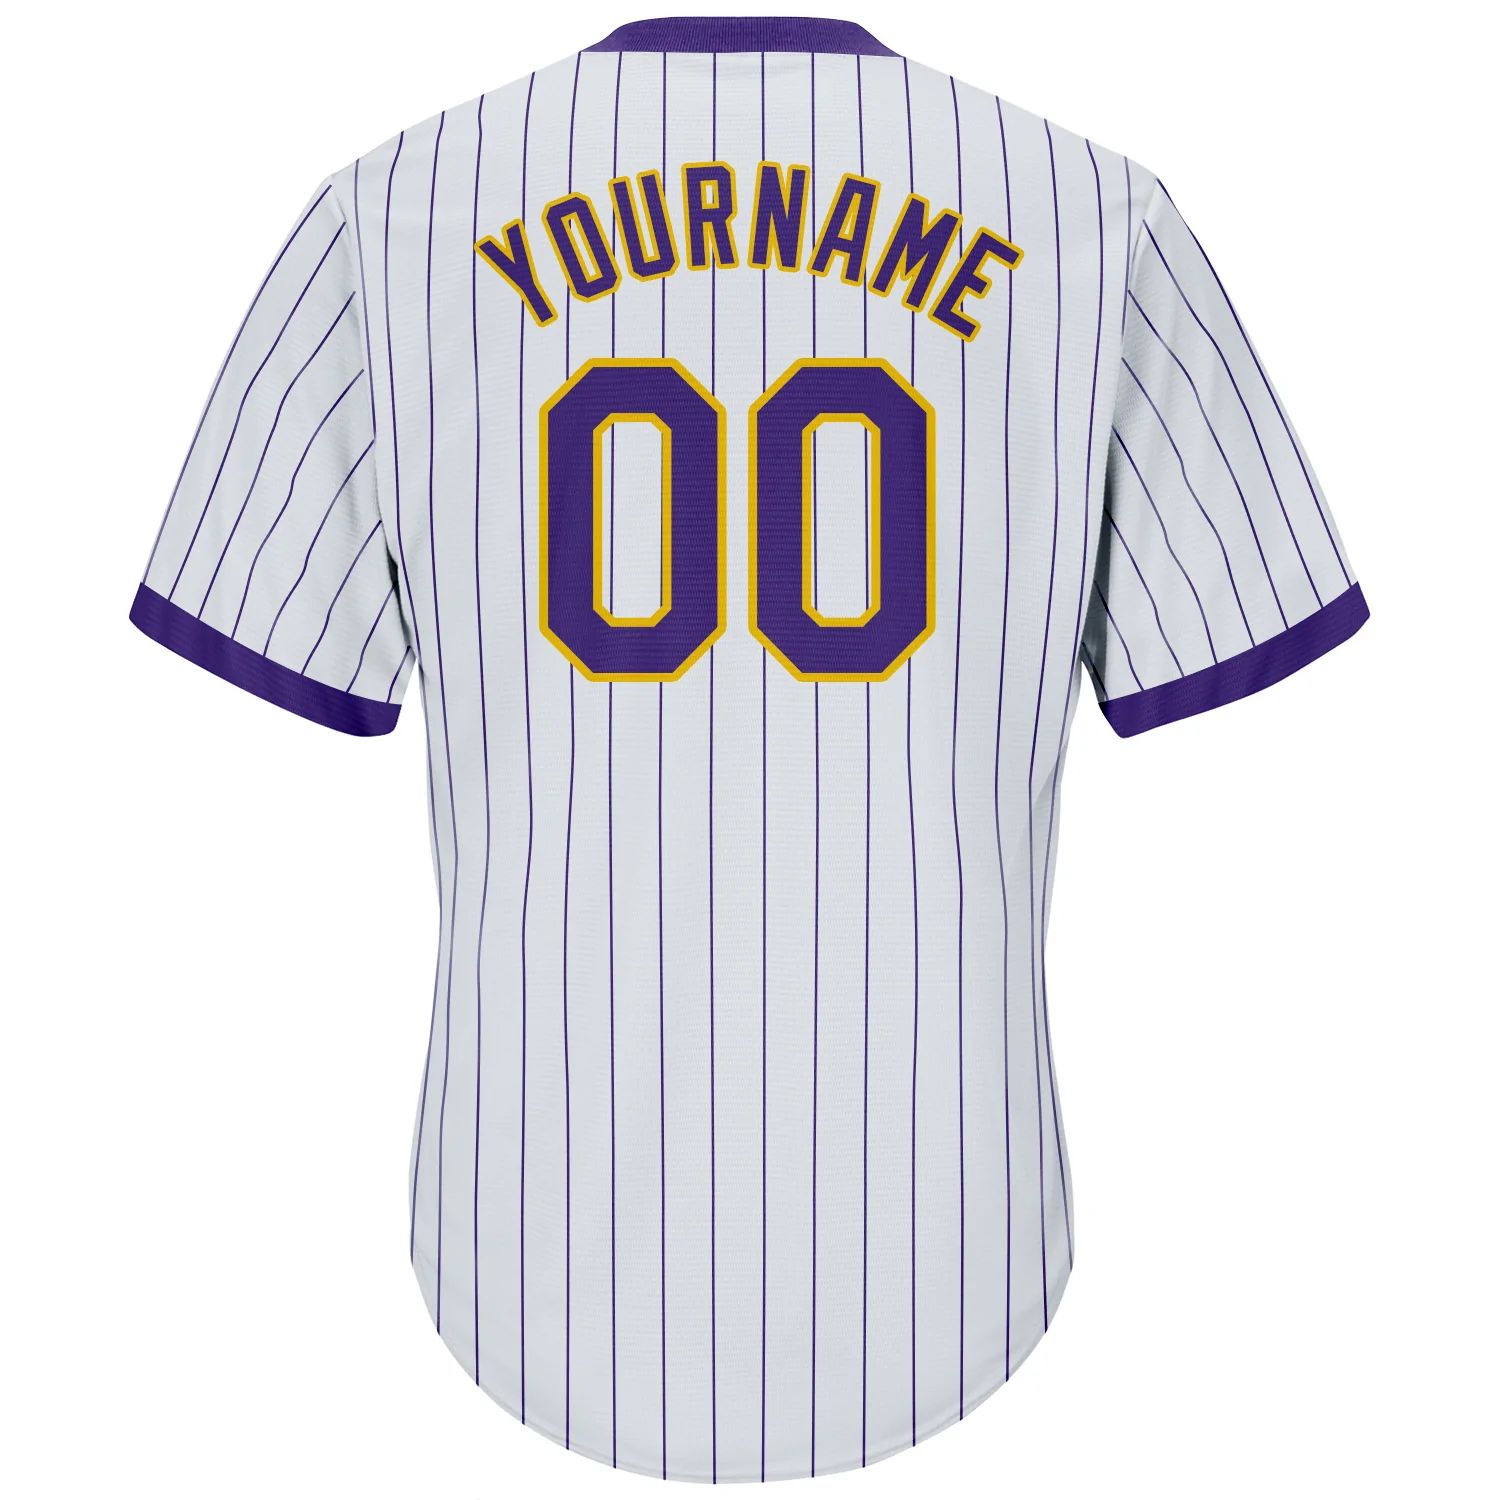 build-gold-white-purple-strip-baseball-purple-jersey-authentic-throwback-ewhite02586-online-3.jpg